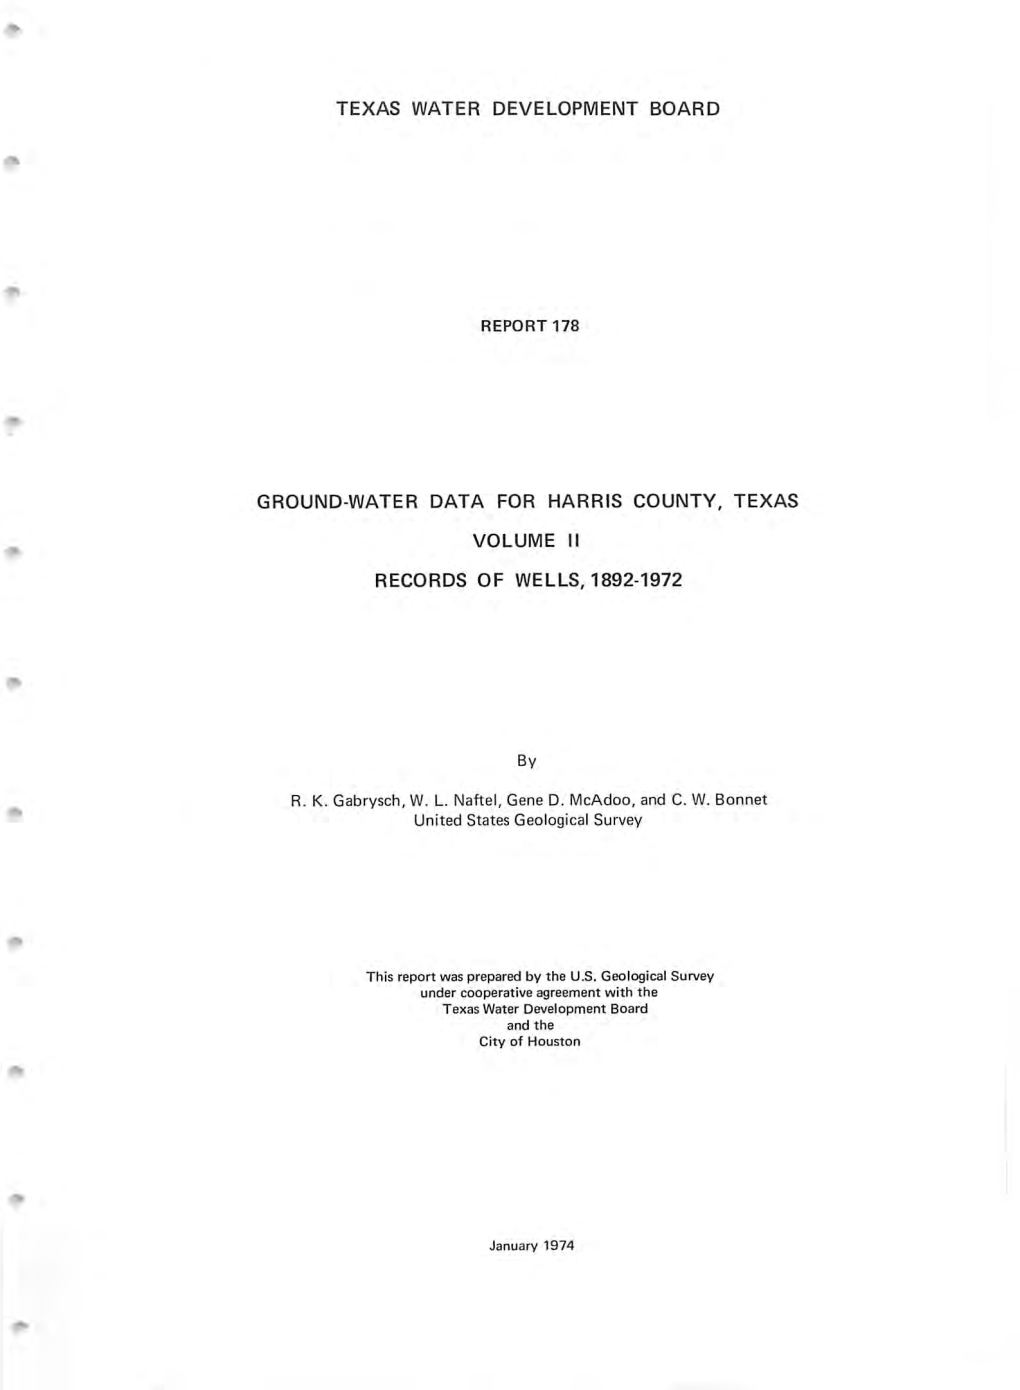 Ground-Water Data for Harris County Texas, Volume II